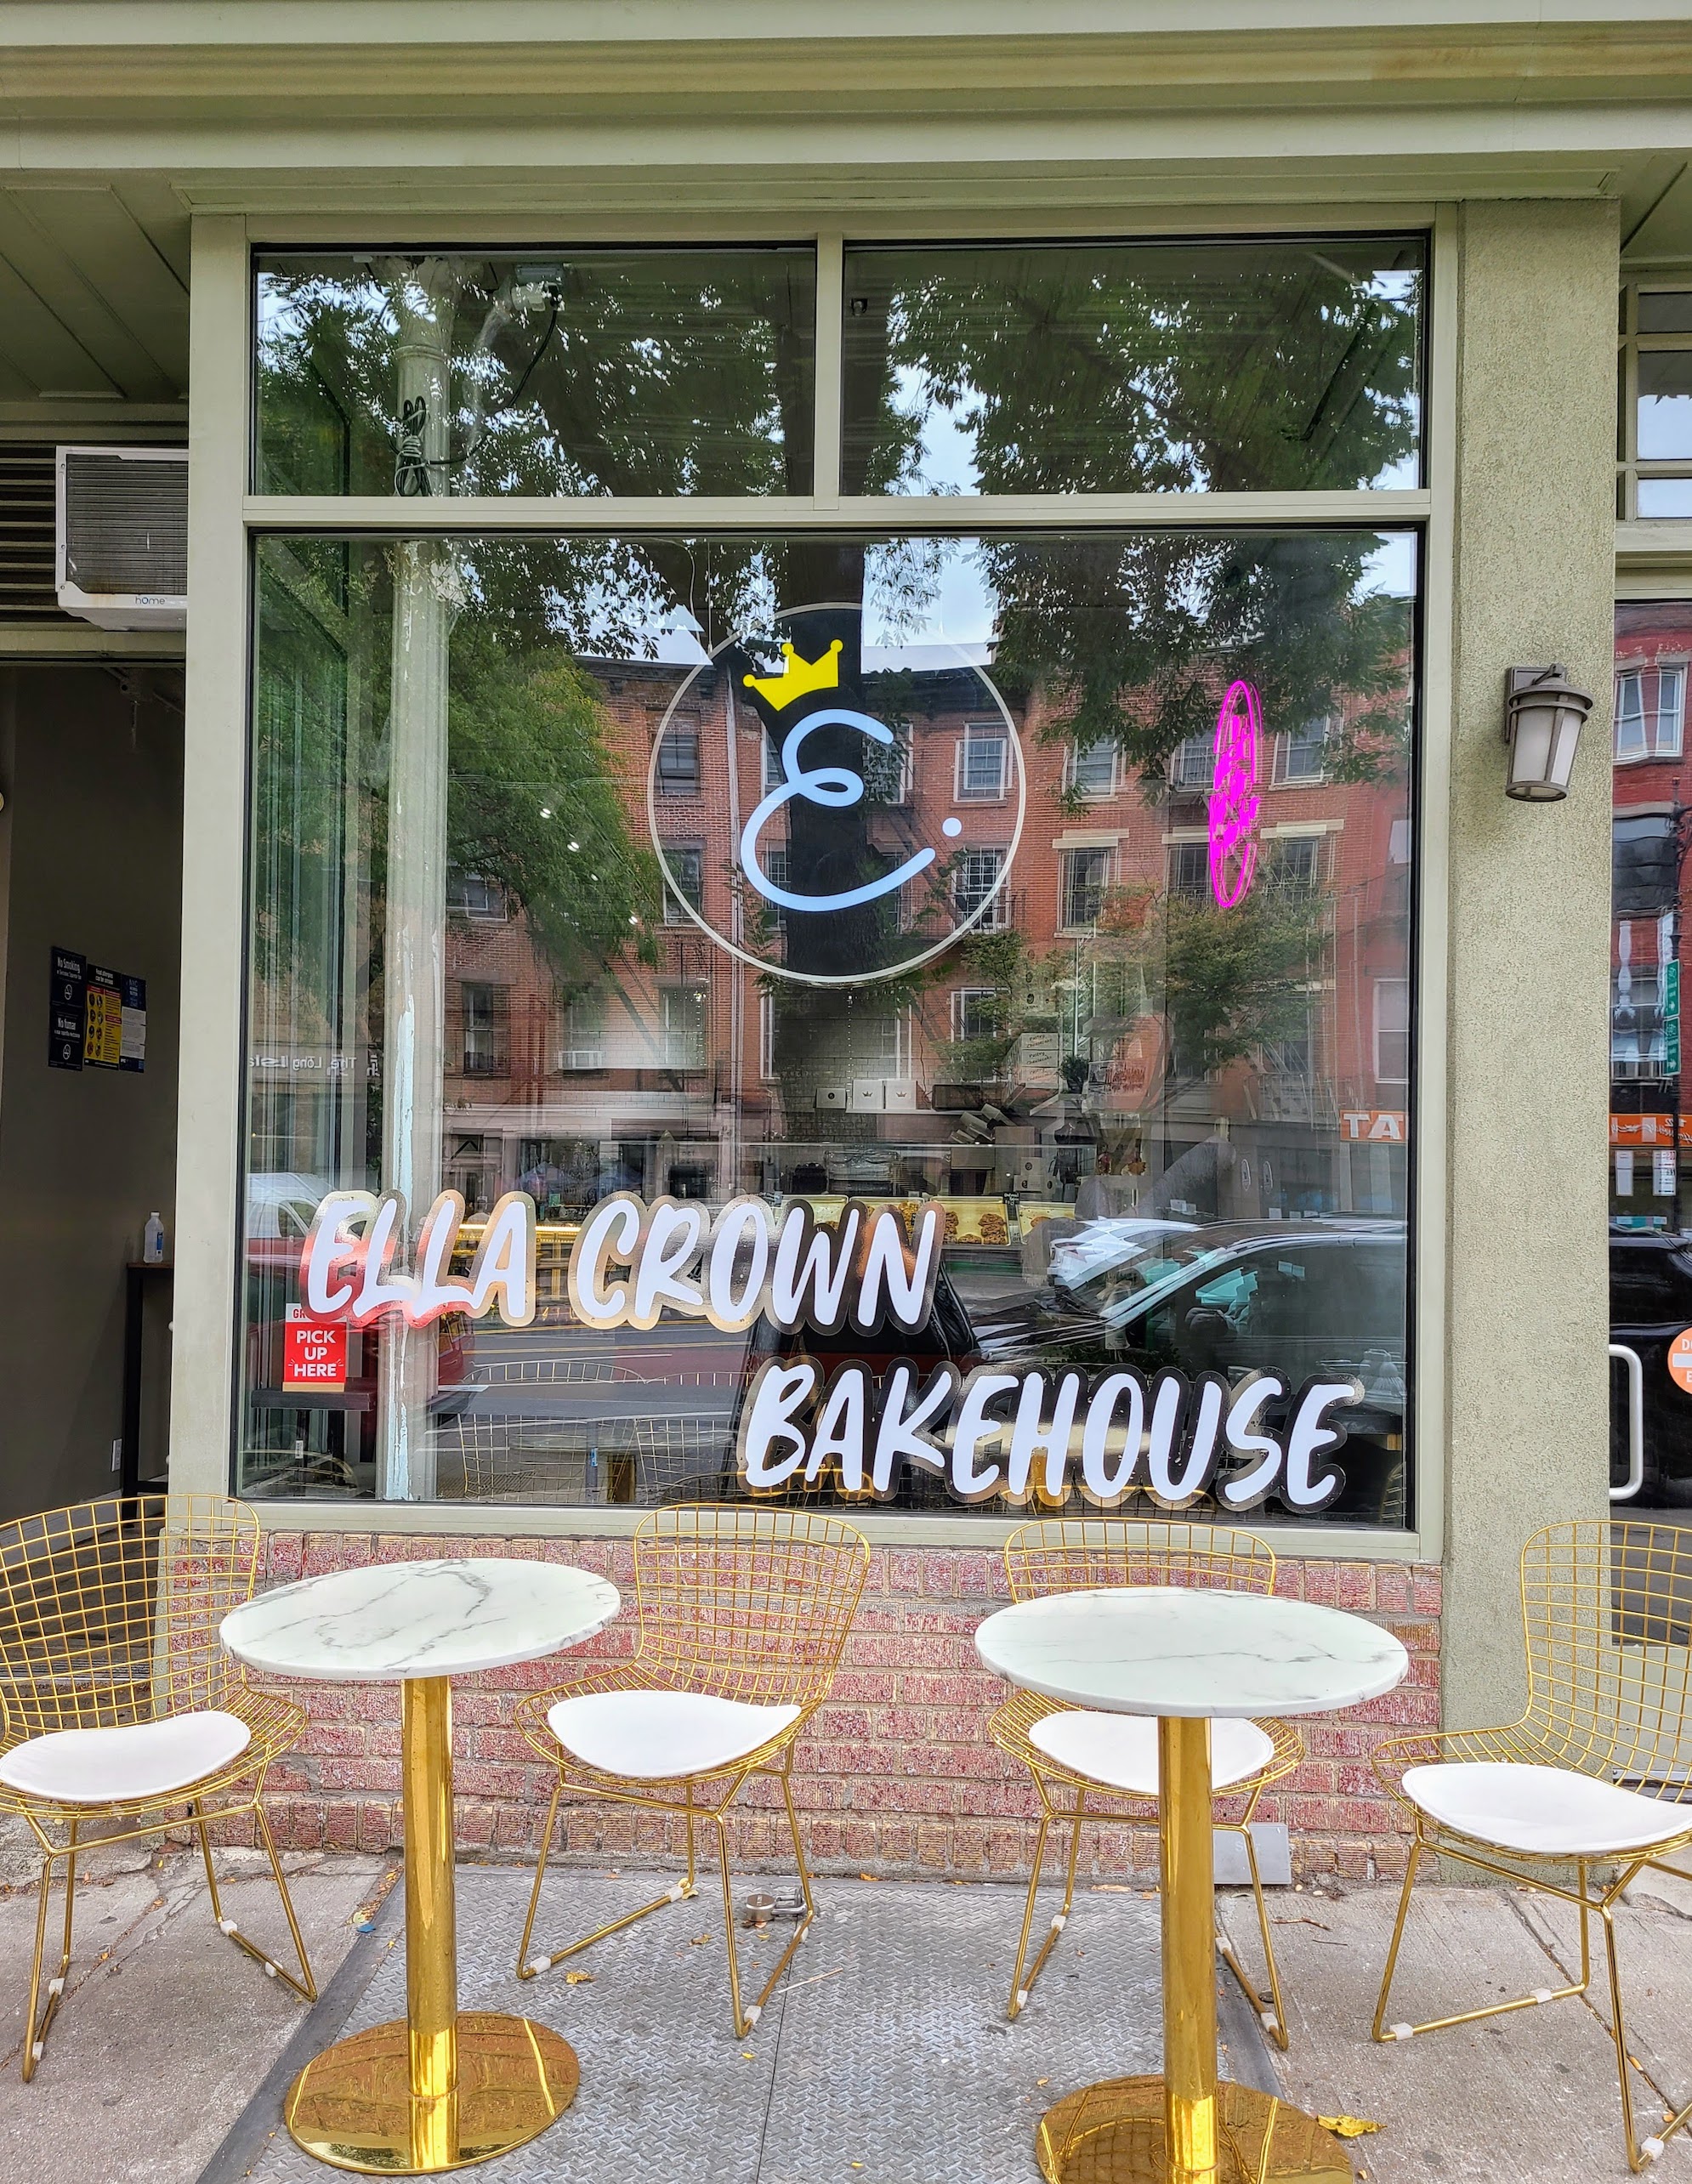 Ella Crown Bakehouse (149 Atlantic Ave.)